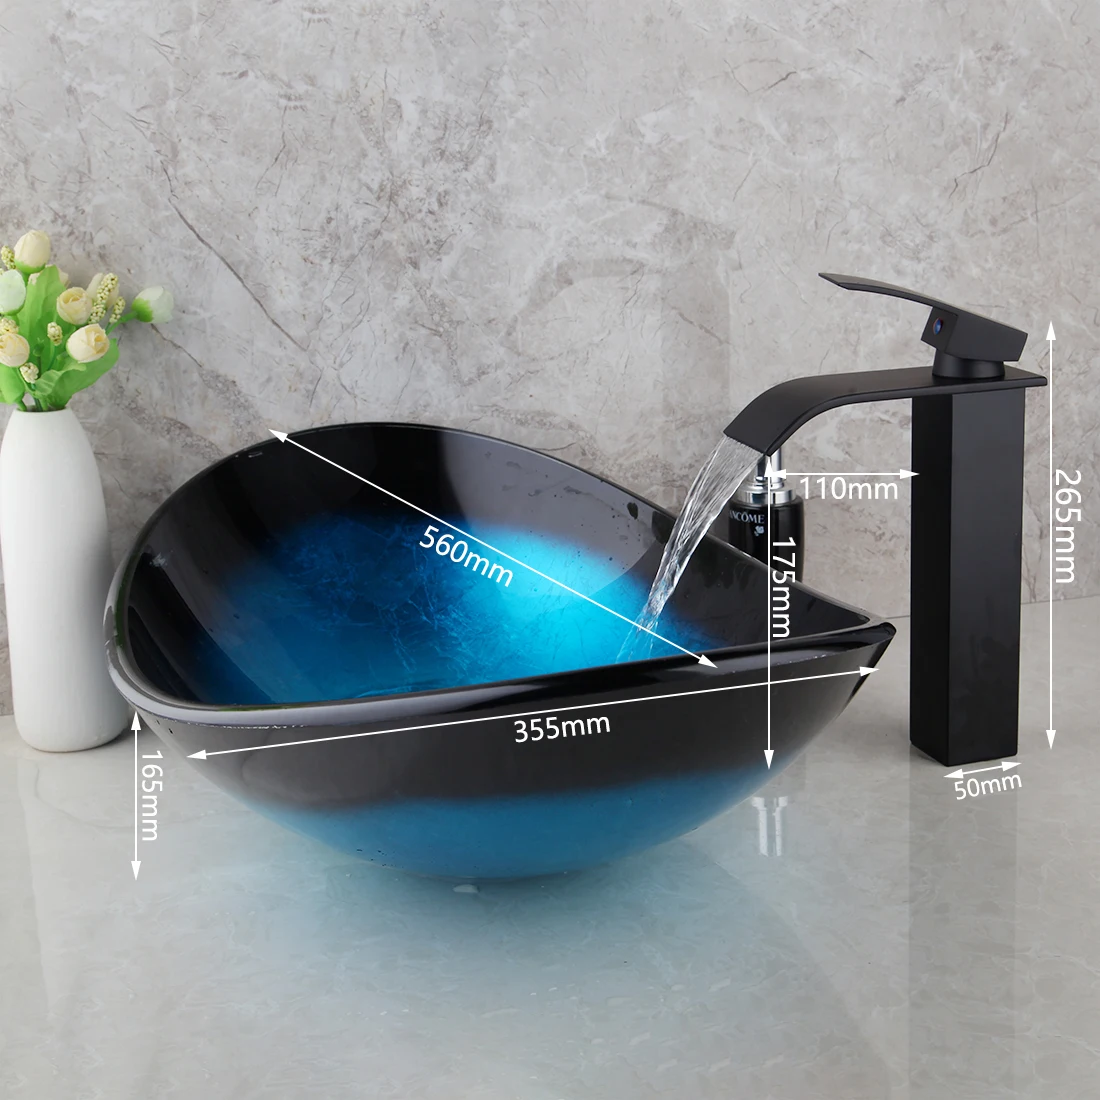 Zappo-強化ガラスのバスルームの浴室の滝のための楕円形のシンク、黒の蛇口タップ、青いシンク、上のカウンターシンク AliExpress